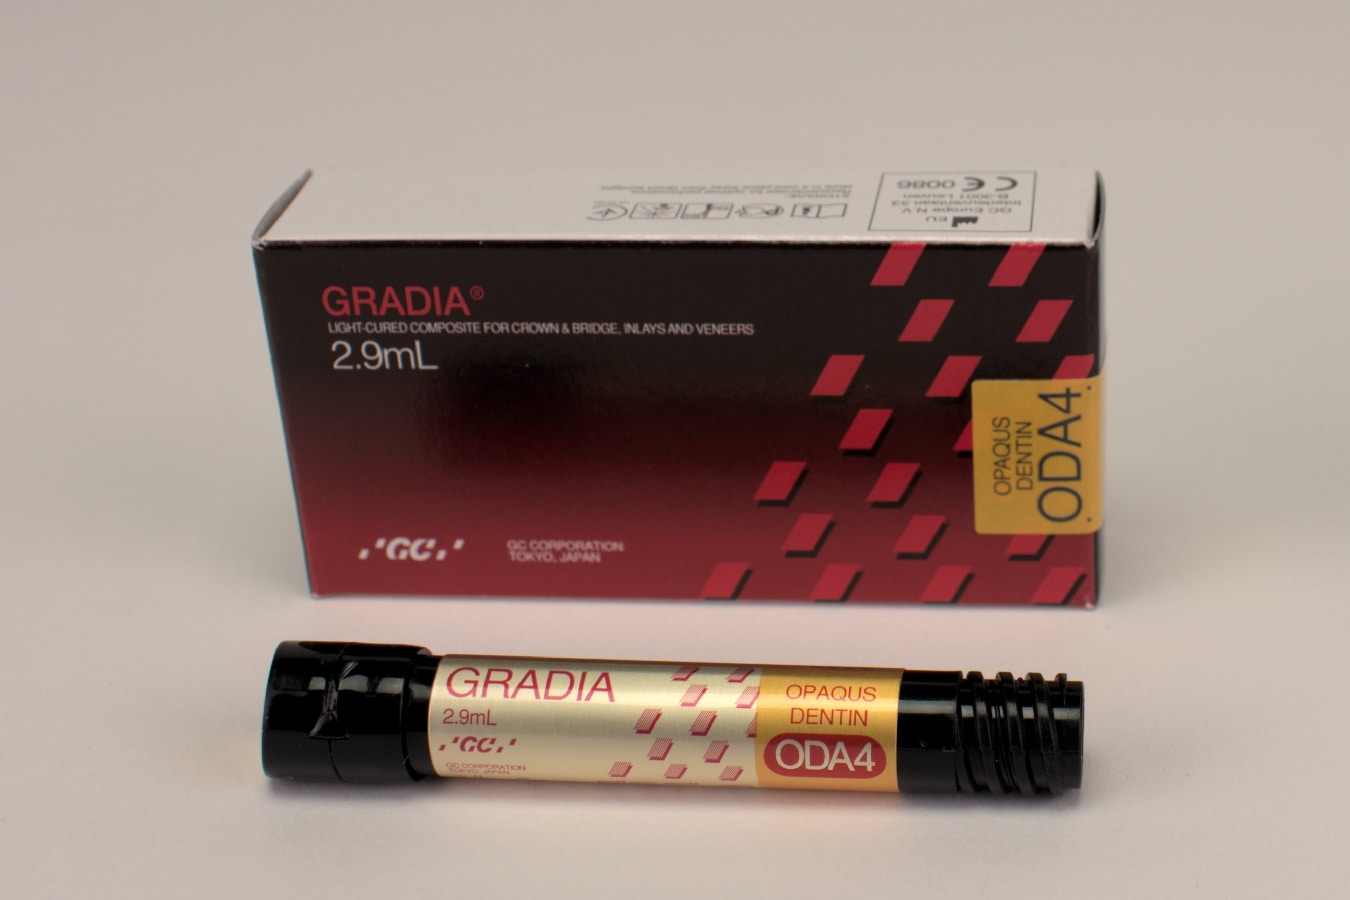 Gradia Opaque Dentin OD-A4 2,9ml